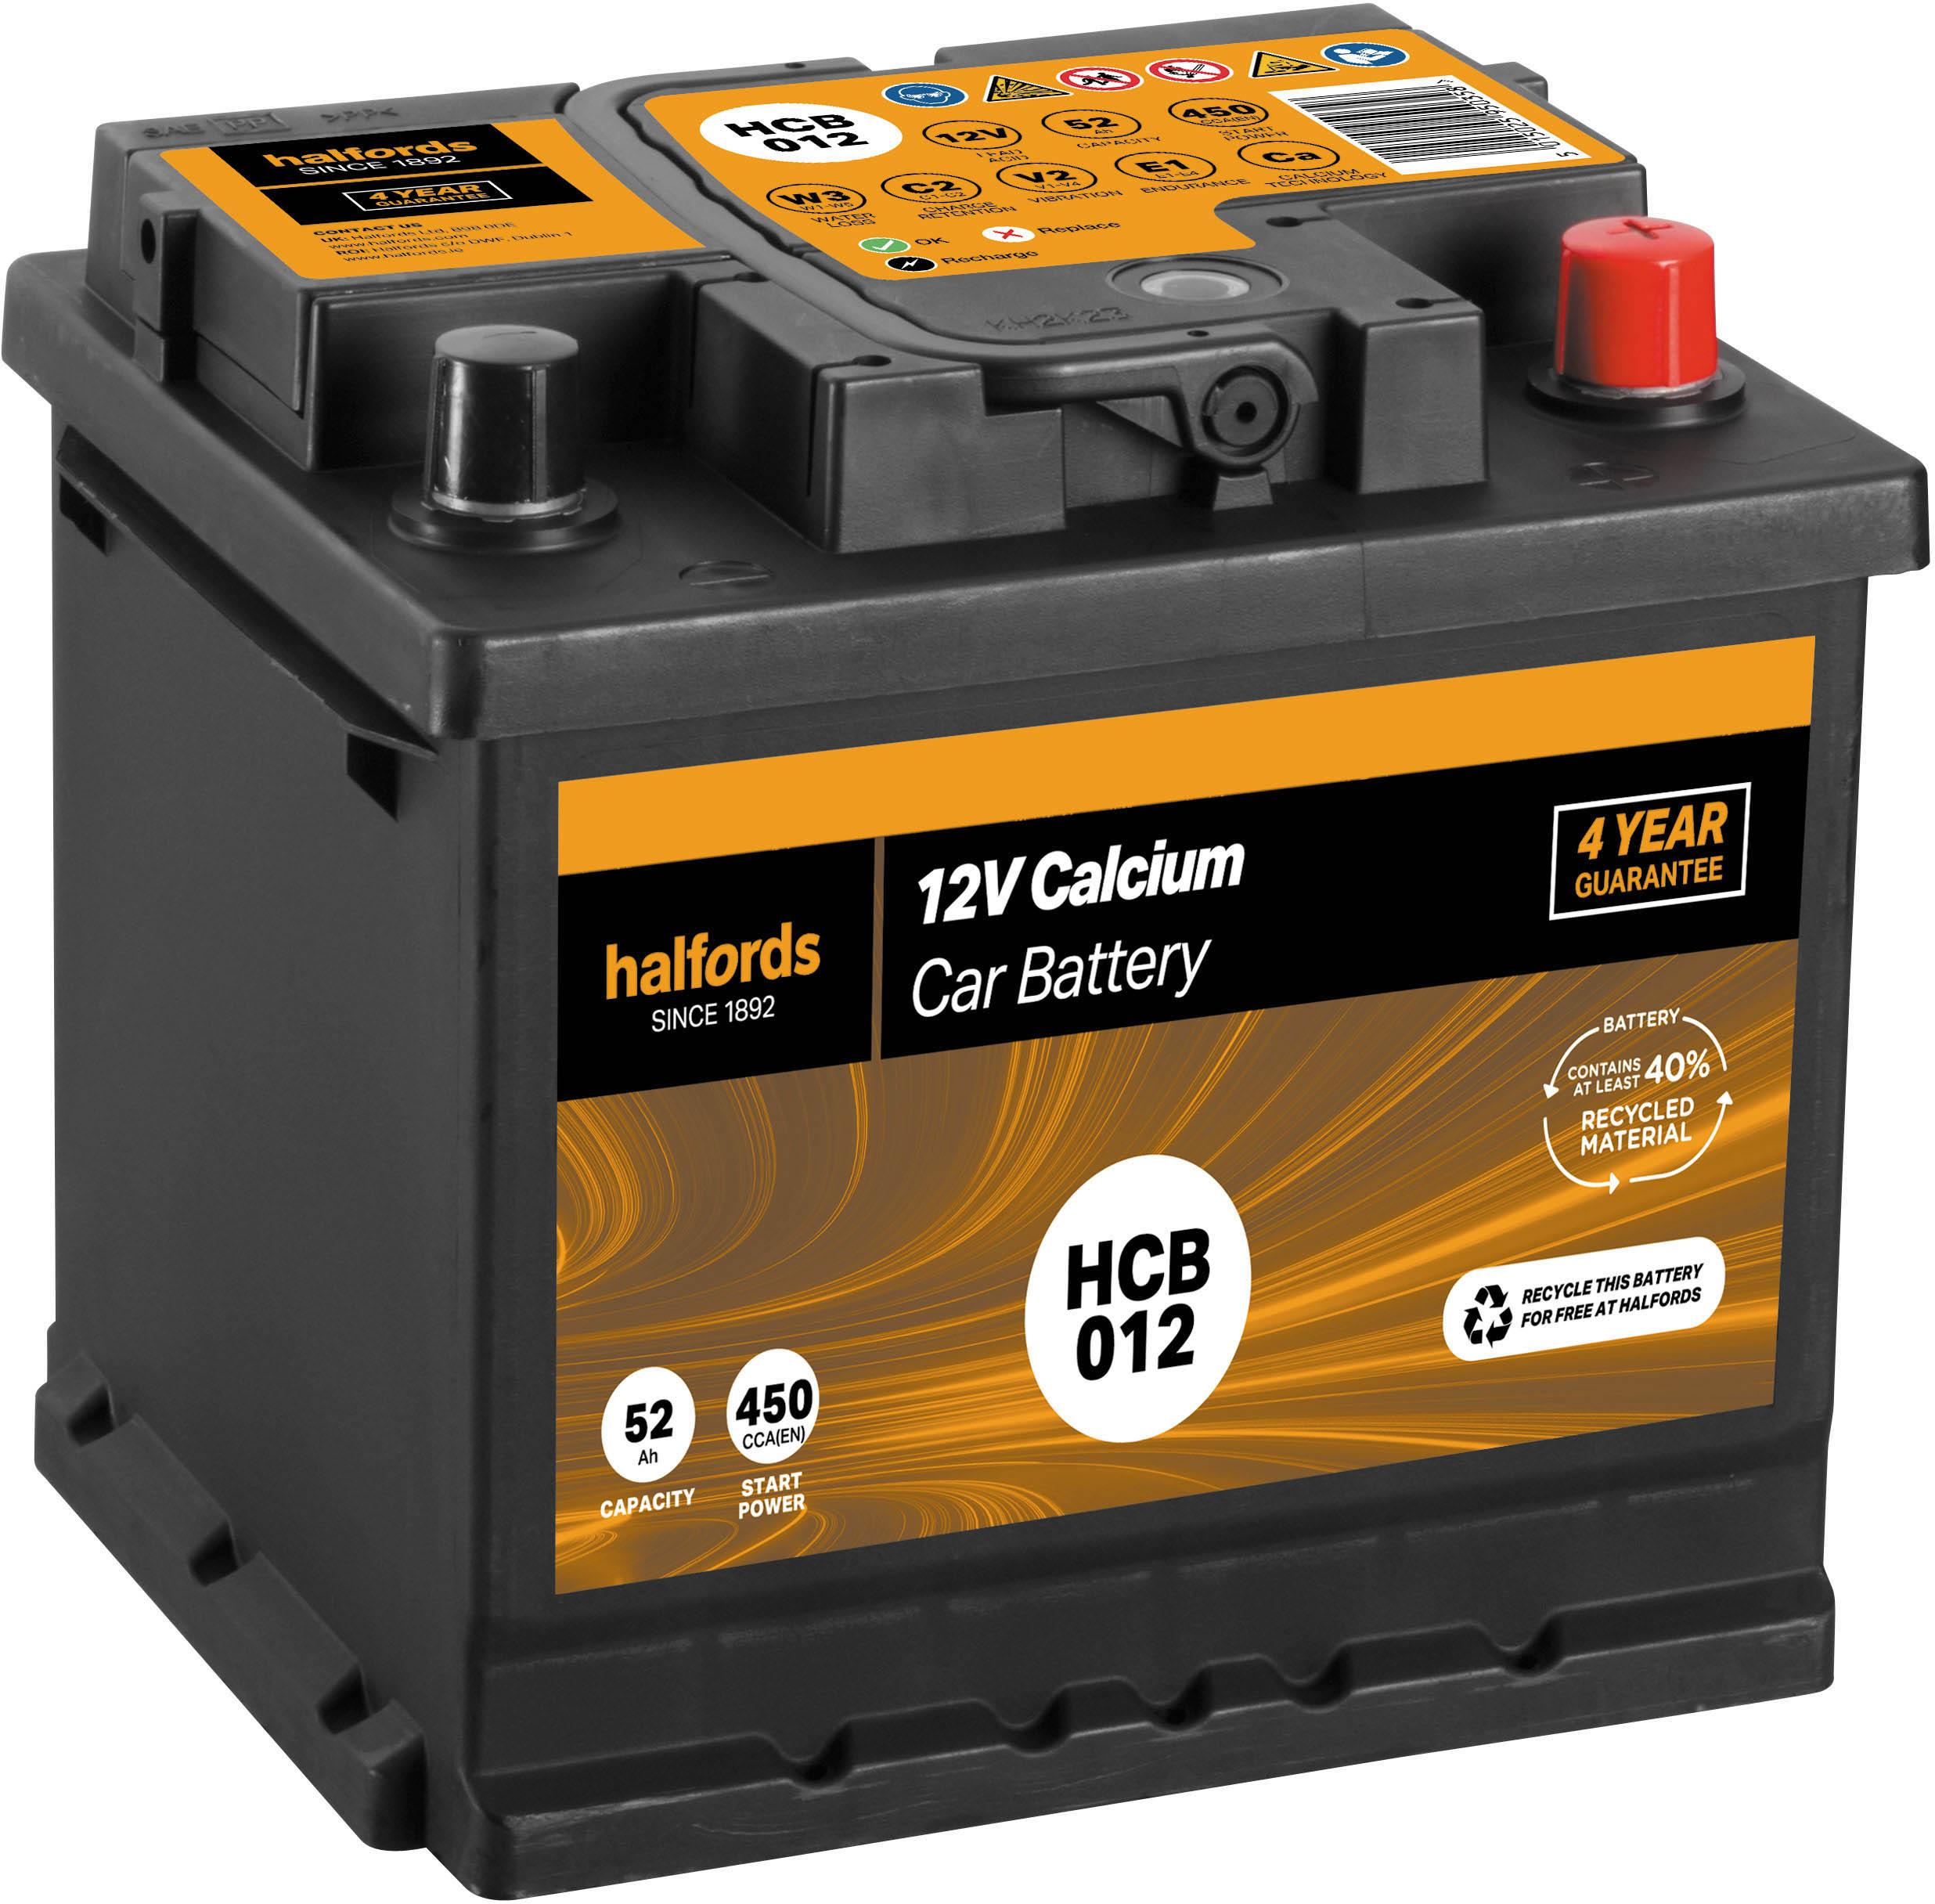 Halfords Hcb012 Calcium 12V Car Battery 4 Year Guarantee